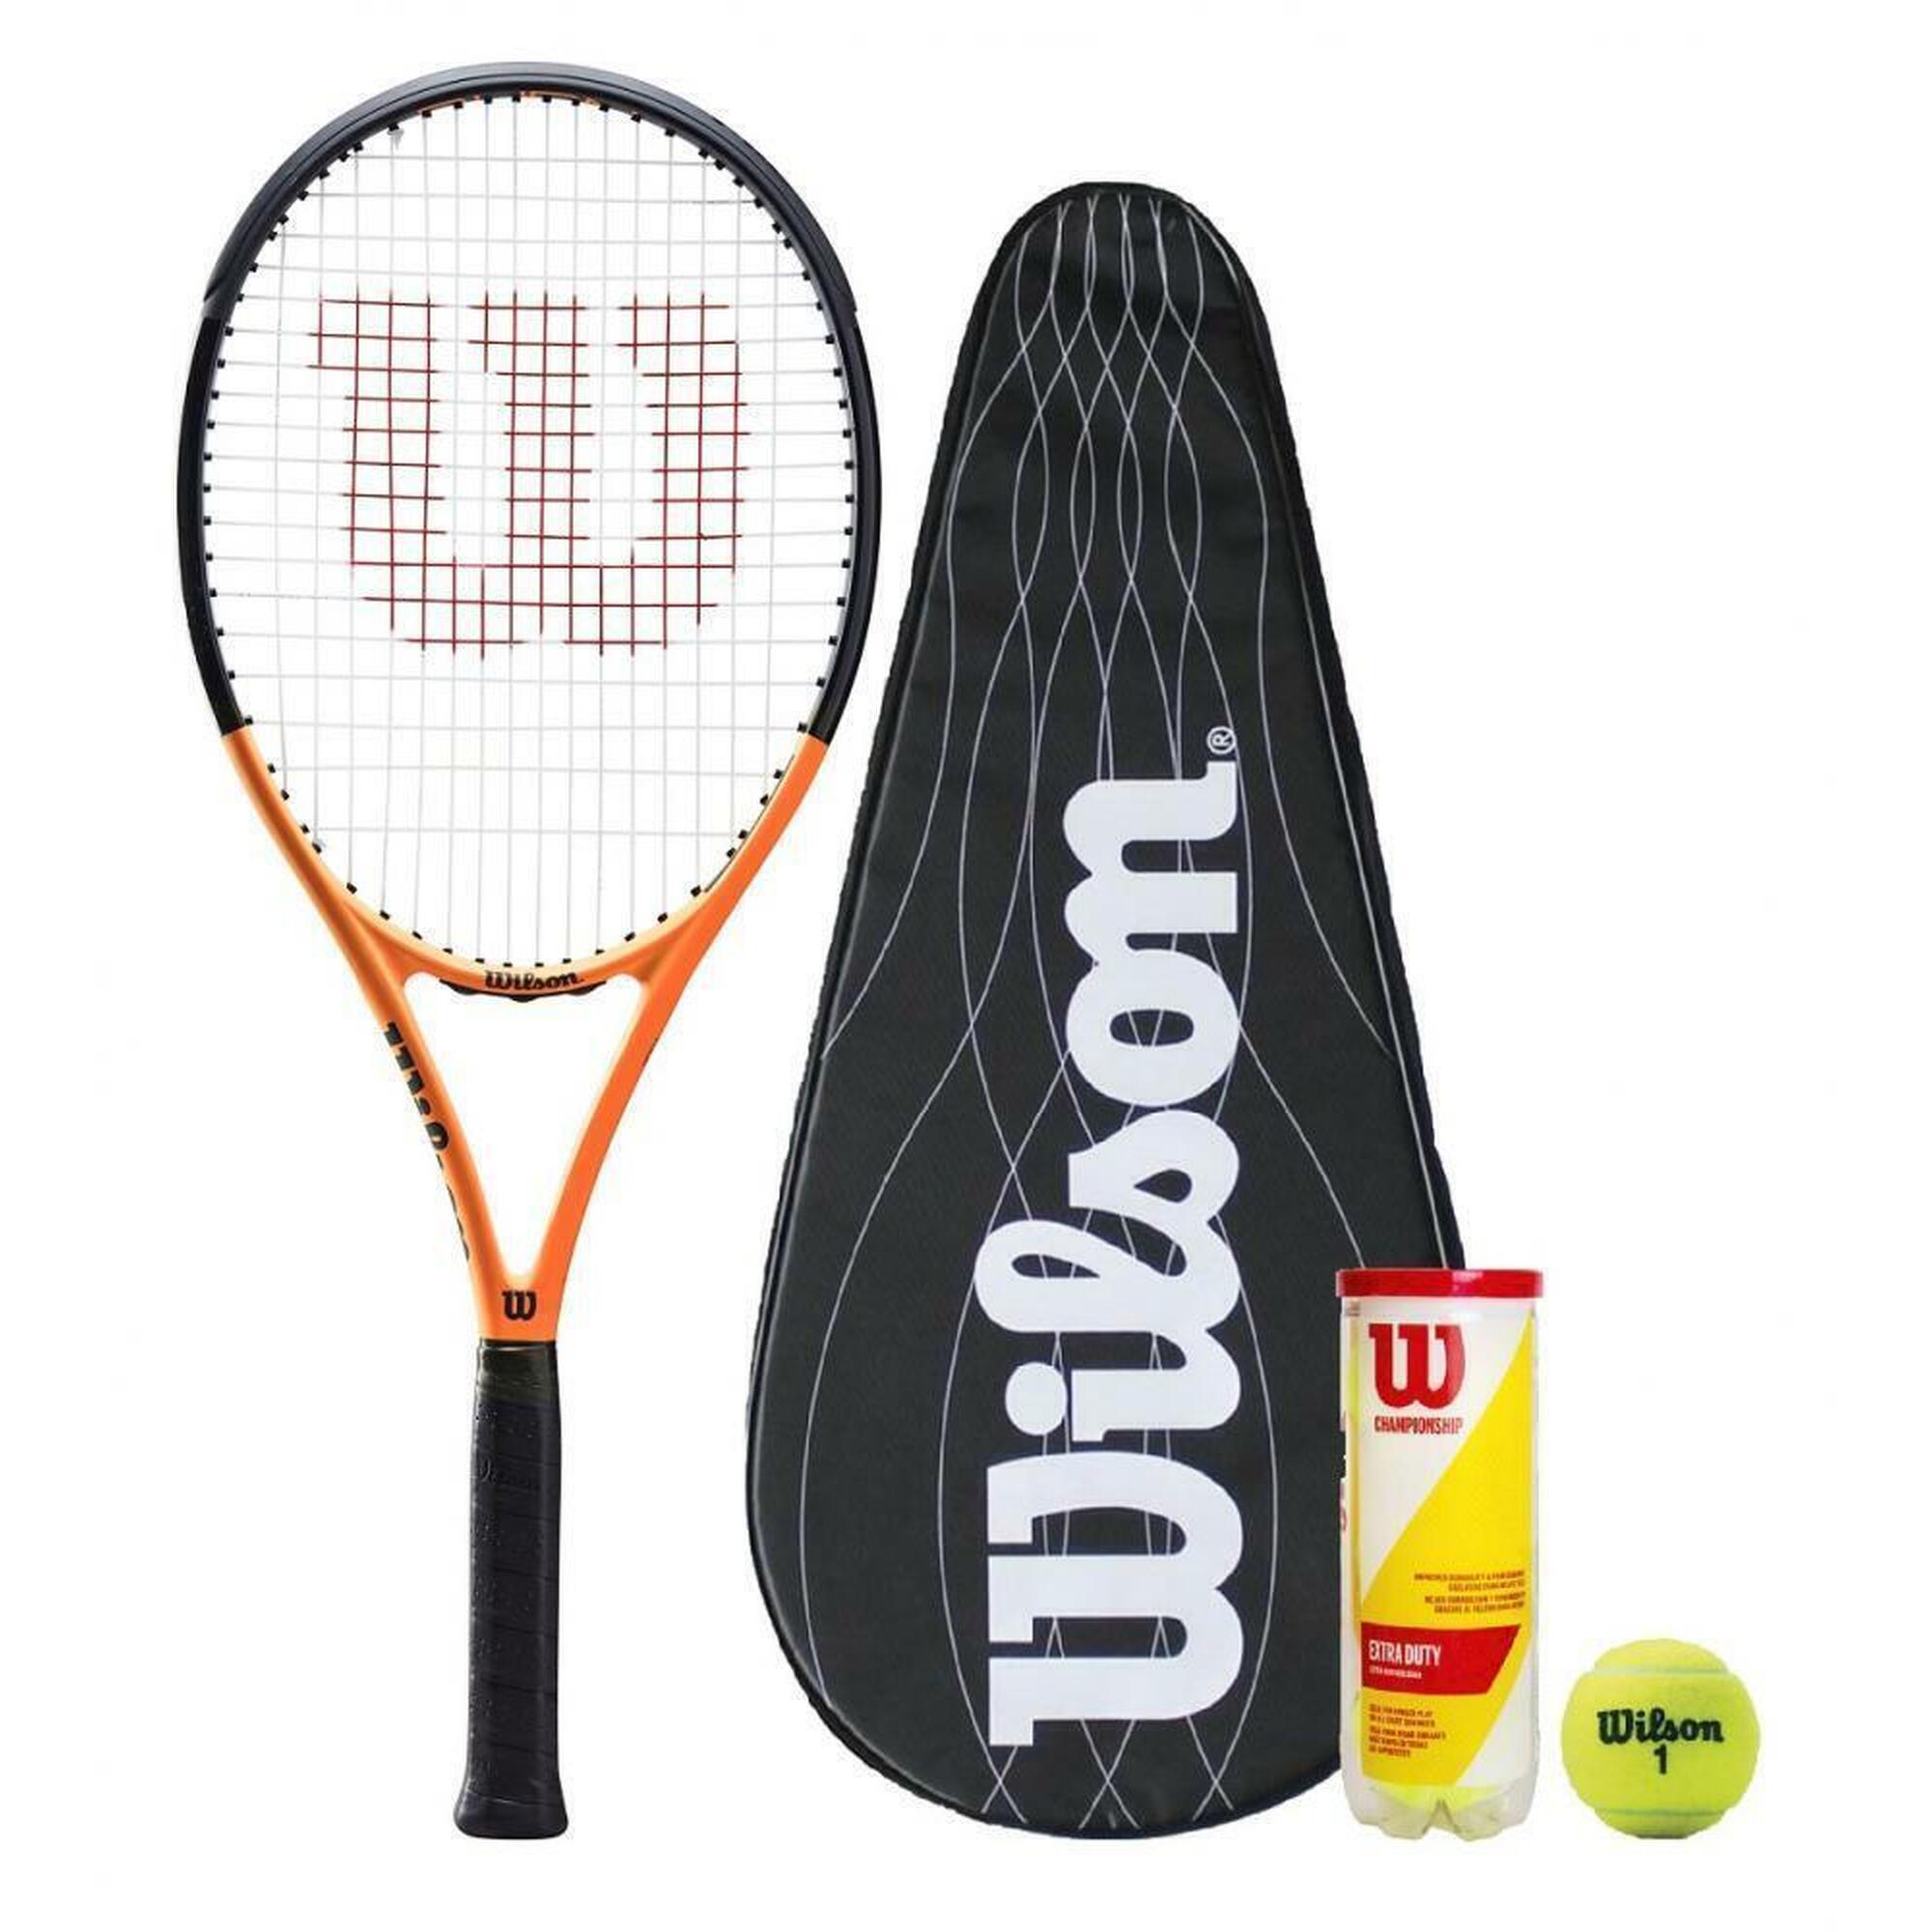 WILSON Wilson Burn Tour XP 103 Tennis Racket + Cover and 3 Tennis Balls